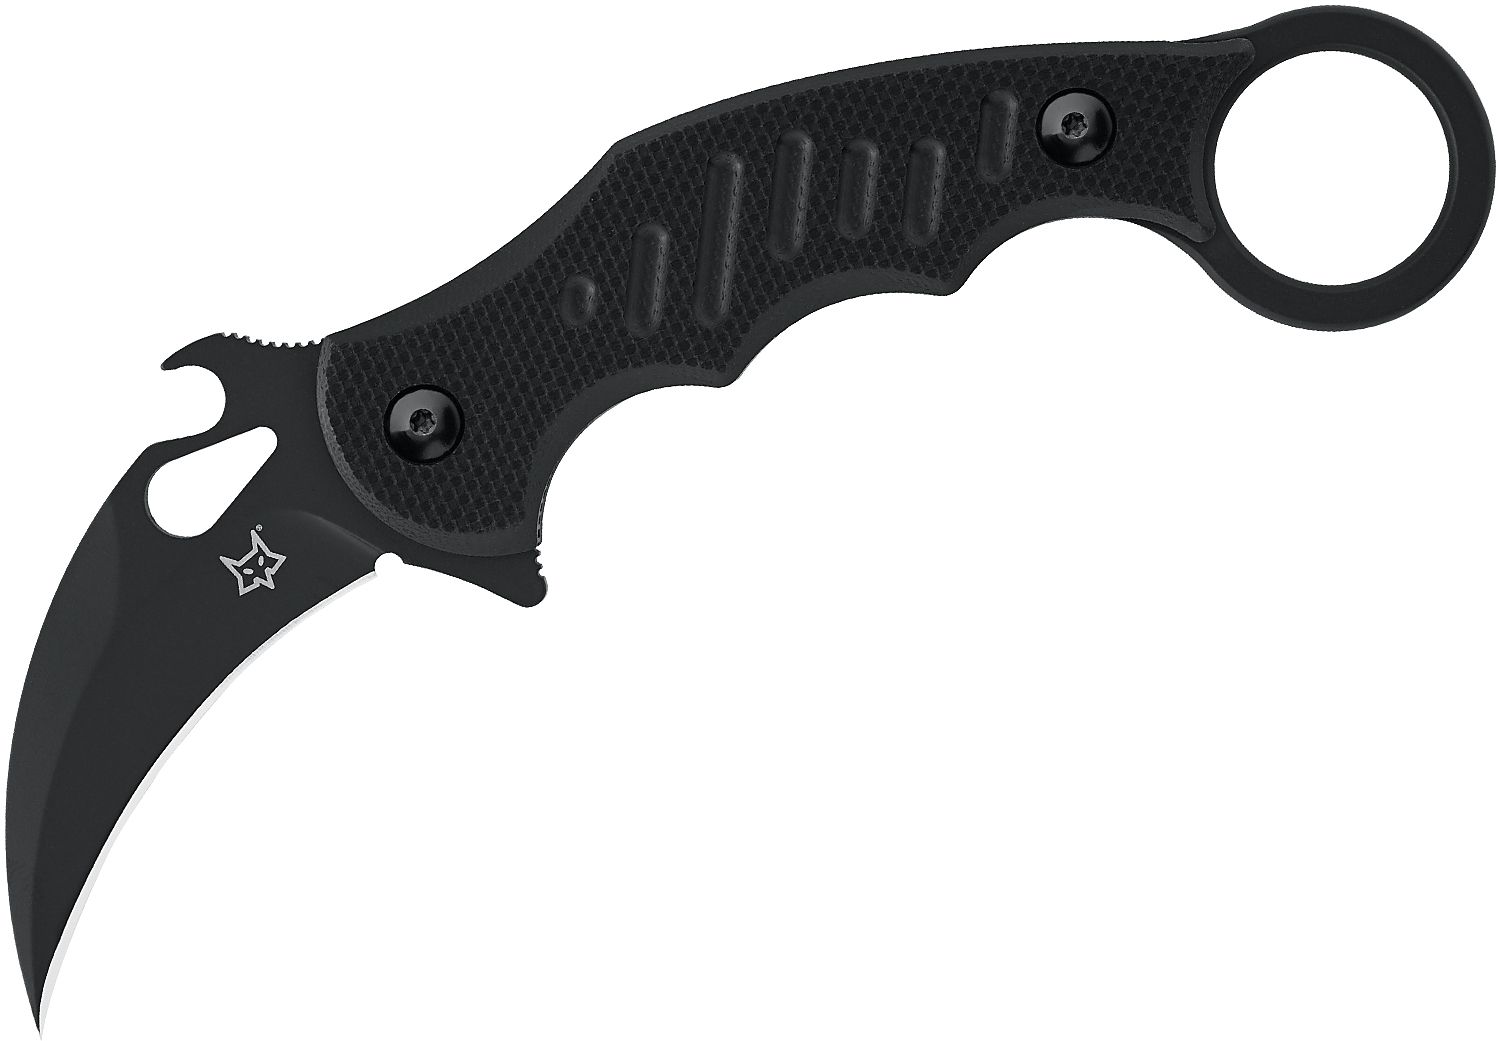 underholdning Brandmand Samarbejdsvillig Fox FX-598 Fixed Blade Karambit Knife 2.36" Black Plain Blade, Black G10  Handles, Kydex Sheath - KnifeCenter - 02FX700